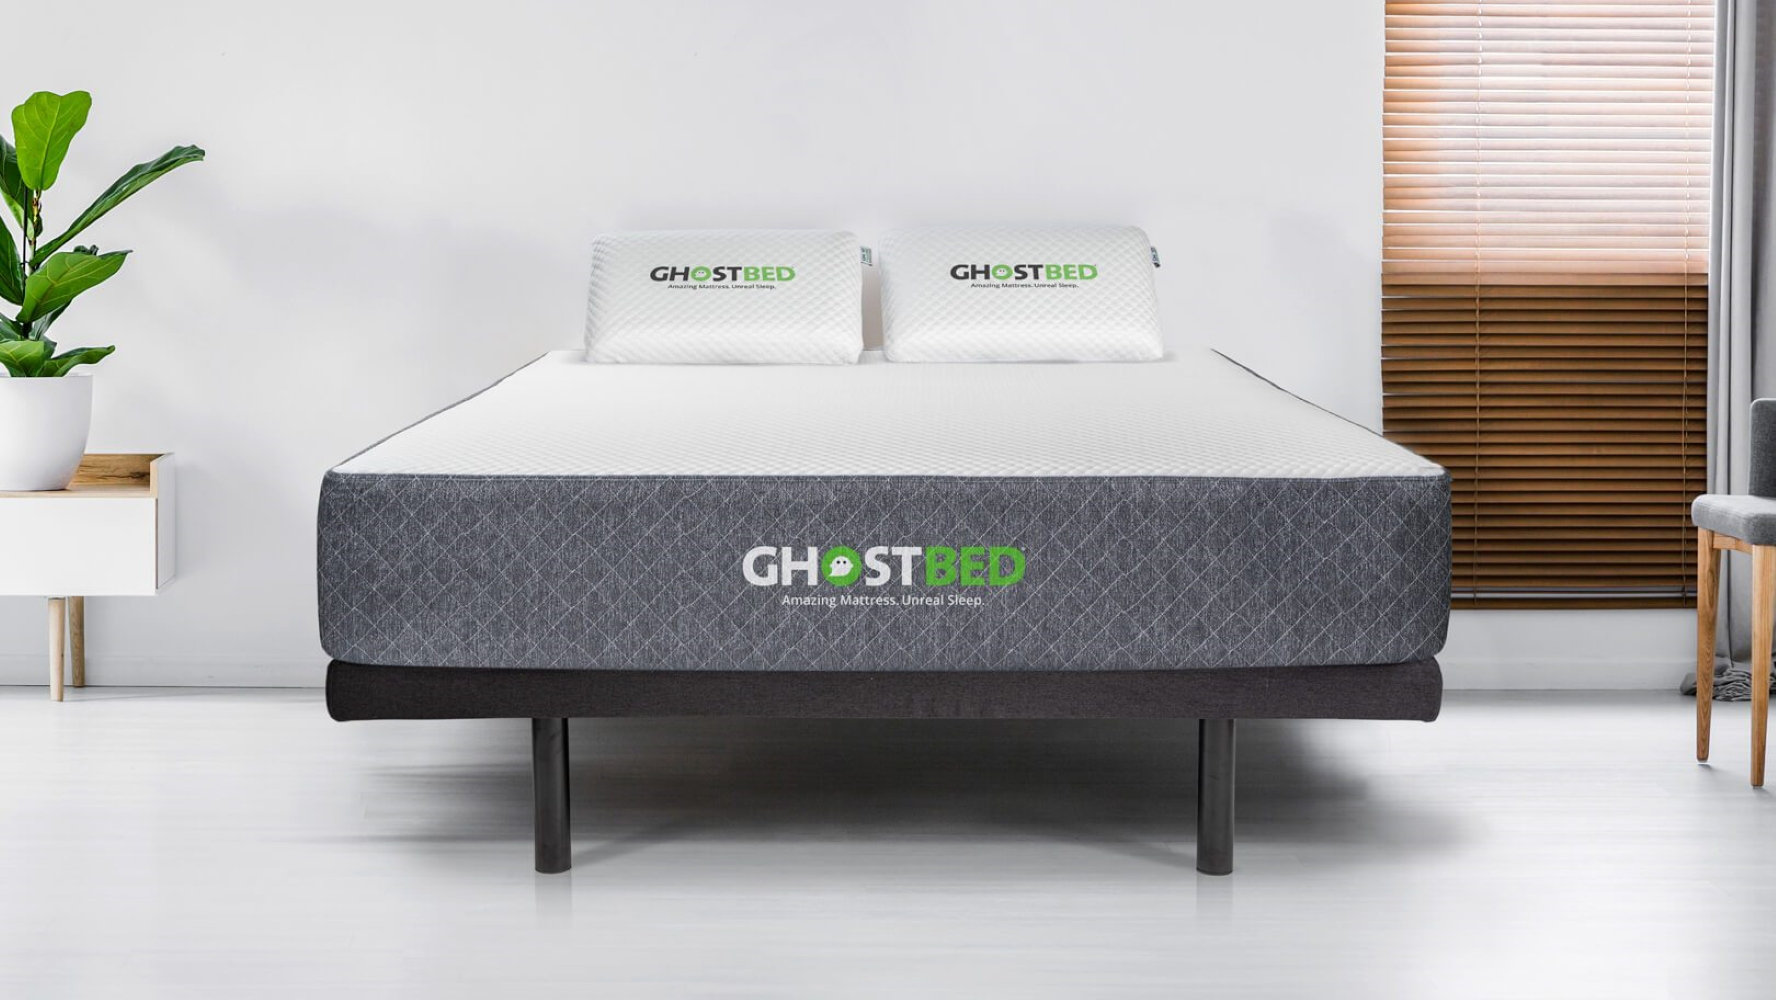 ghostbed gel memory foam mattress stores